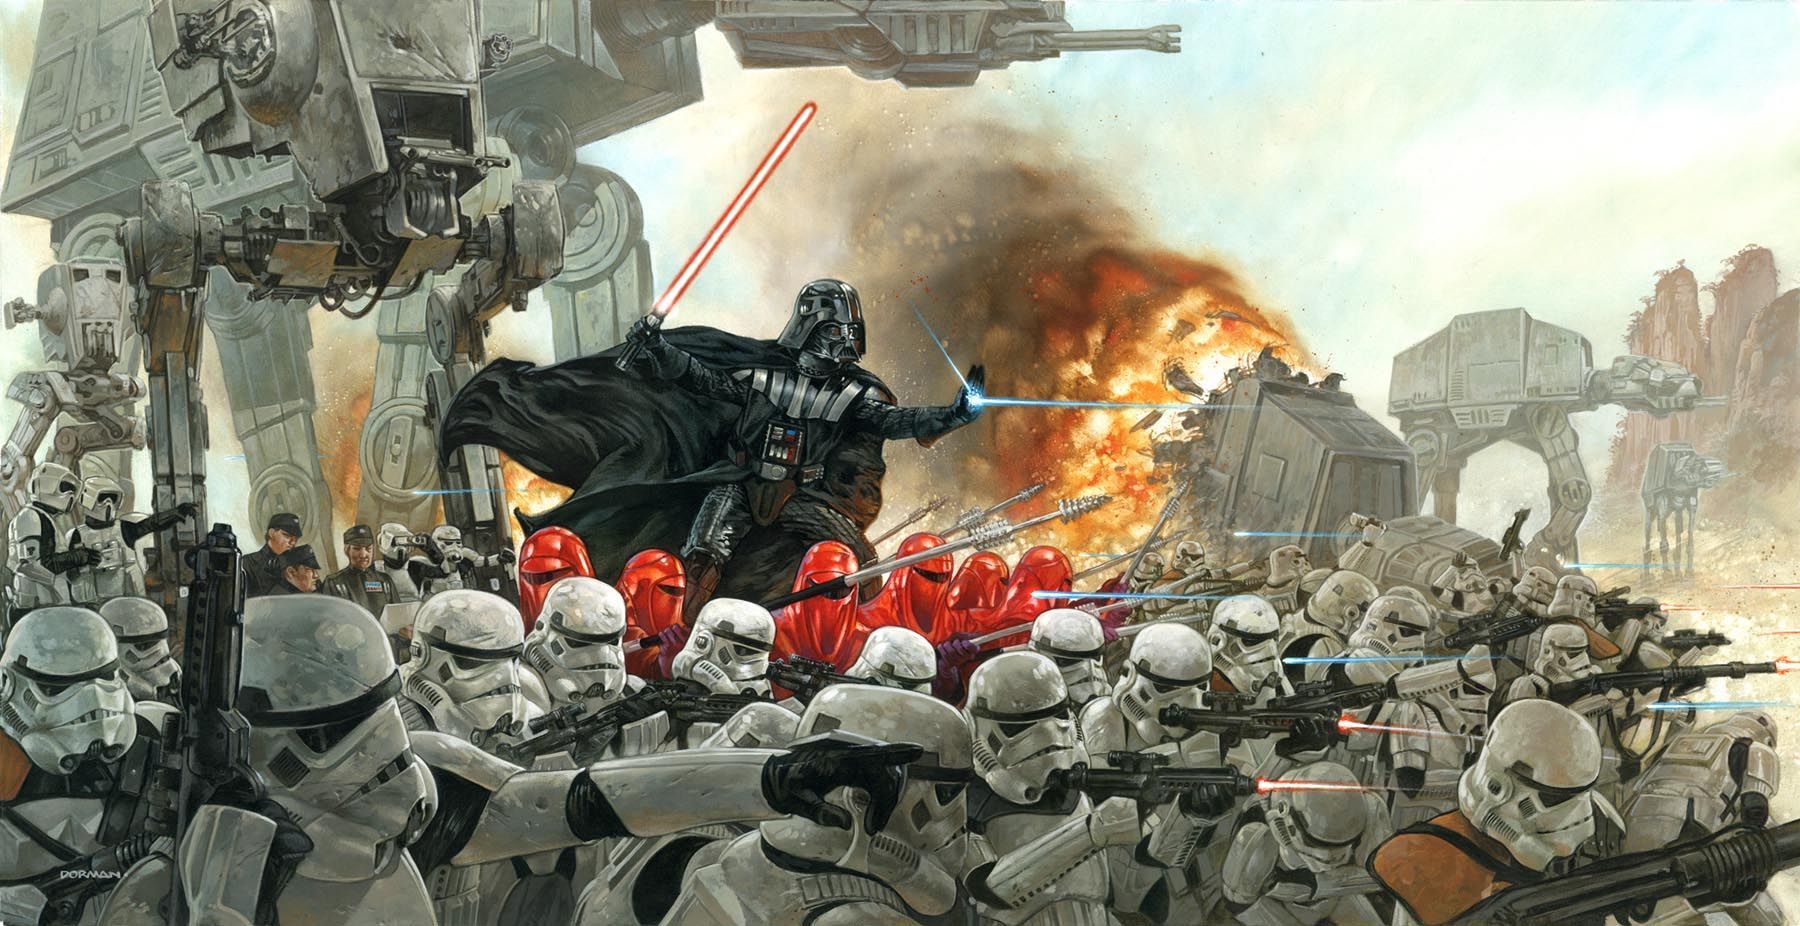 Vader's army. Star wars art, Star wars illustration, Star wars awesome